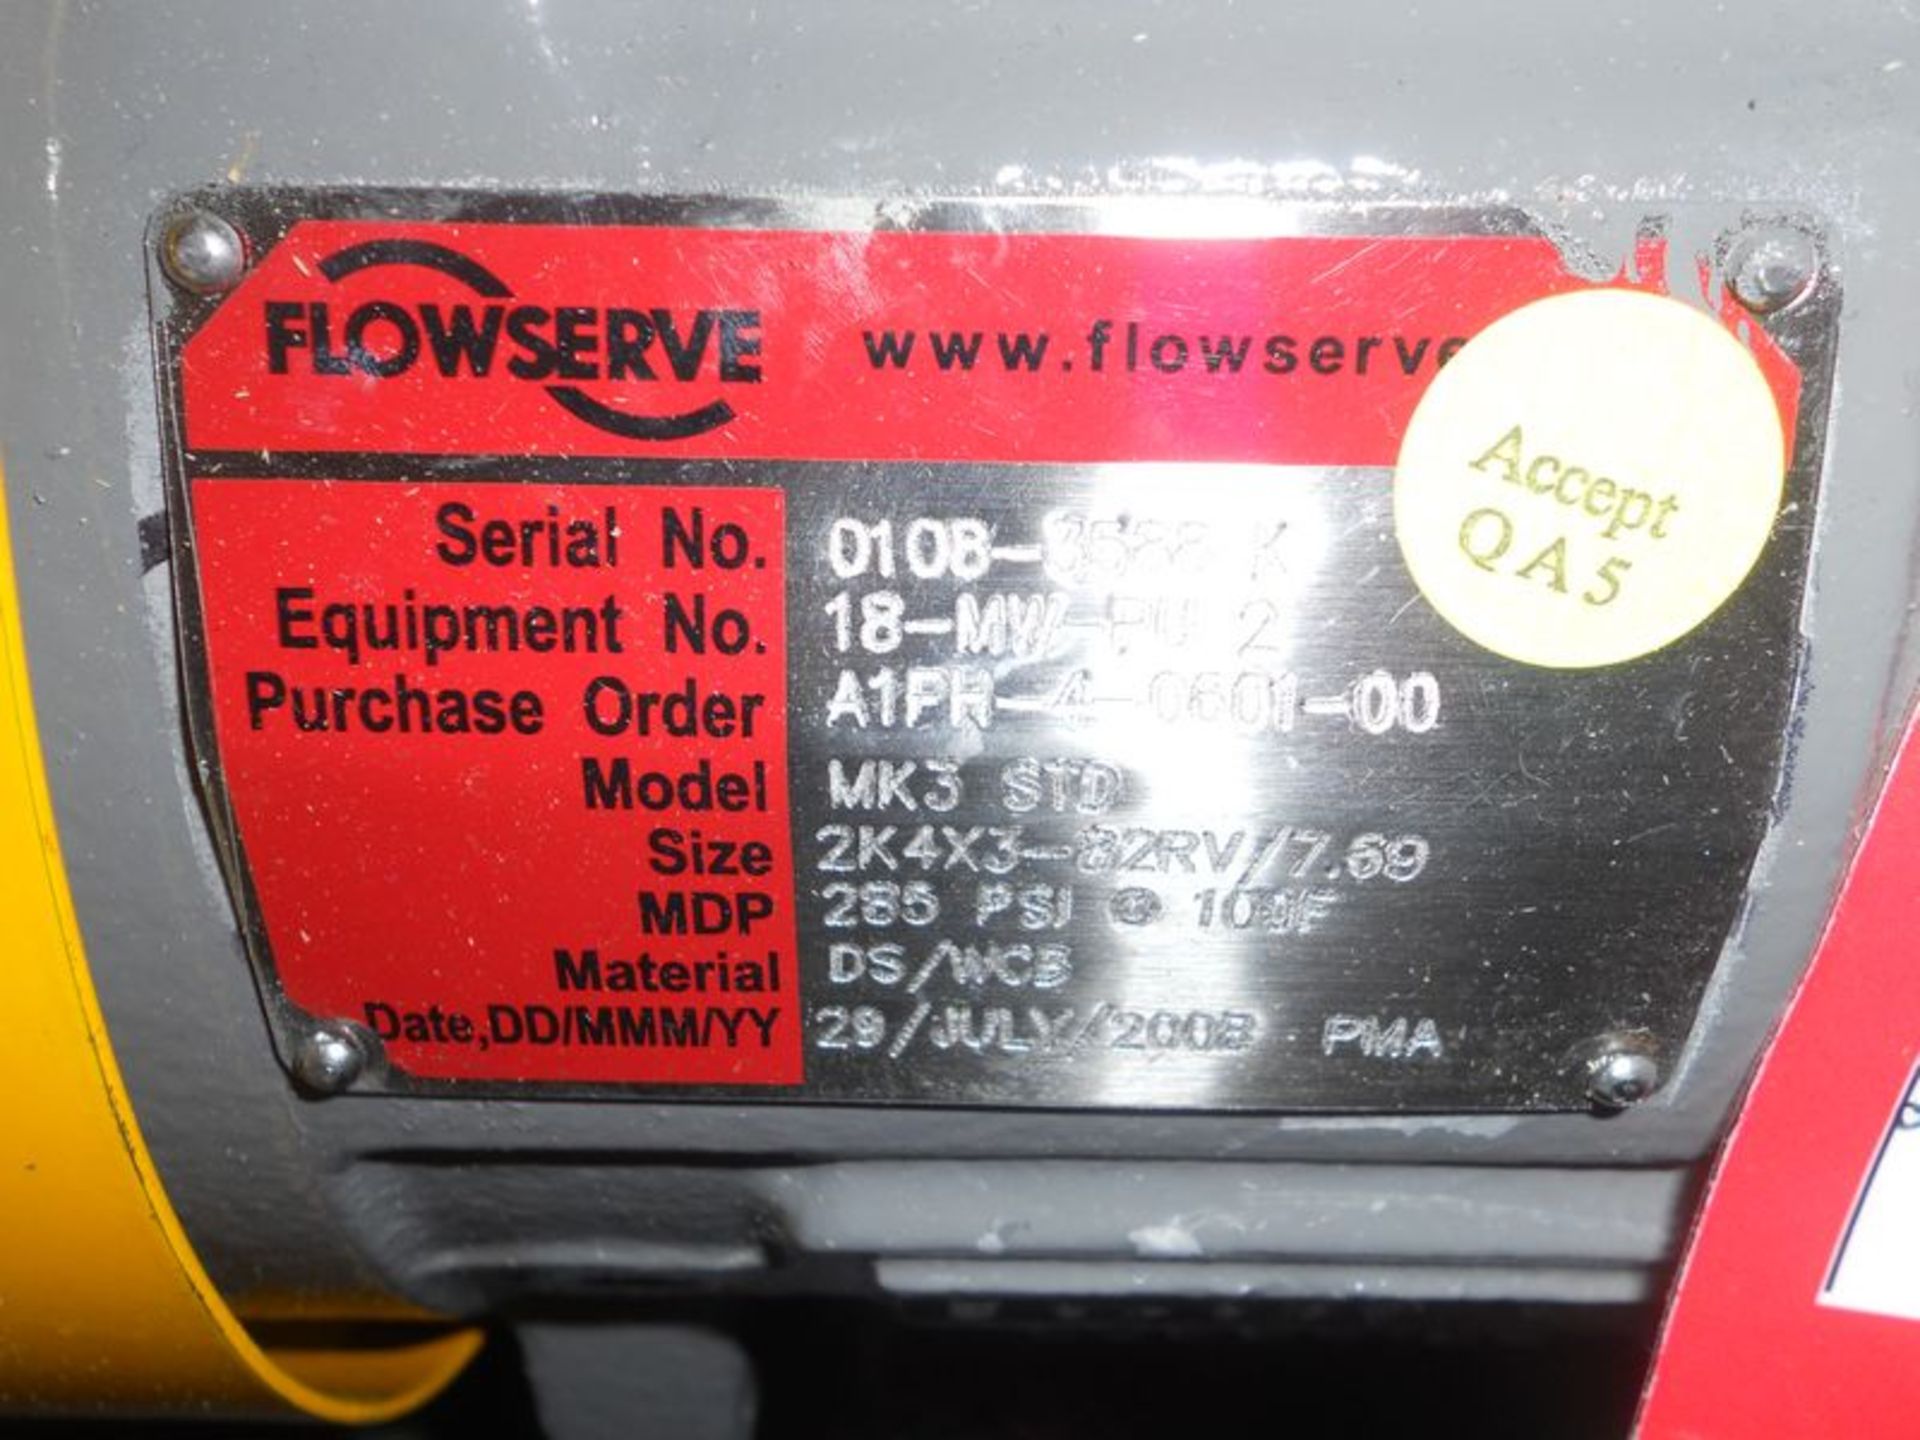 FlowServe MK3 STD centrifugal pump, S/N 0108-3590-G, 4" X 3", 60 HP, MDP 285 psi @ 100 DegF, Size - Image 3 of 6